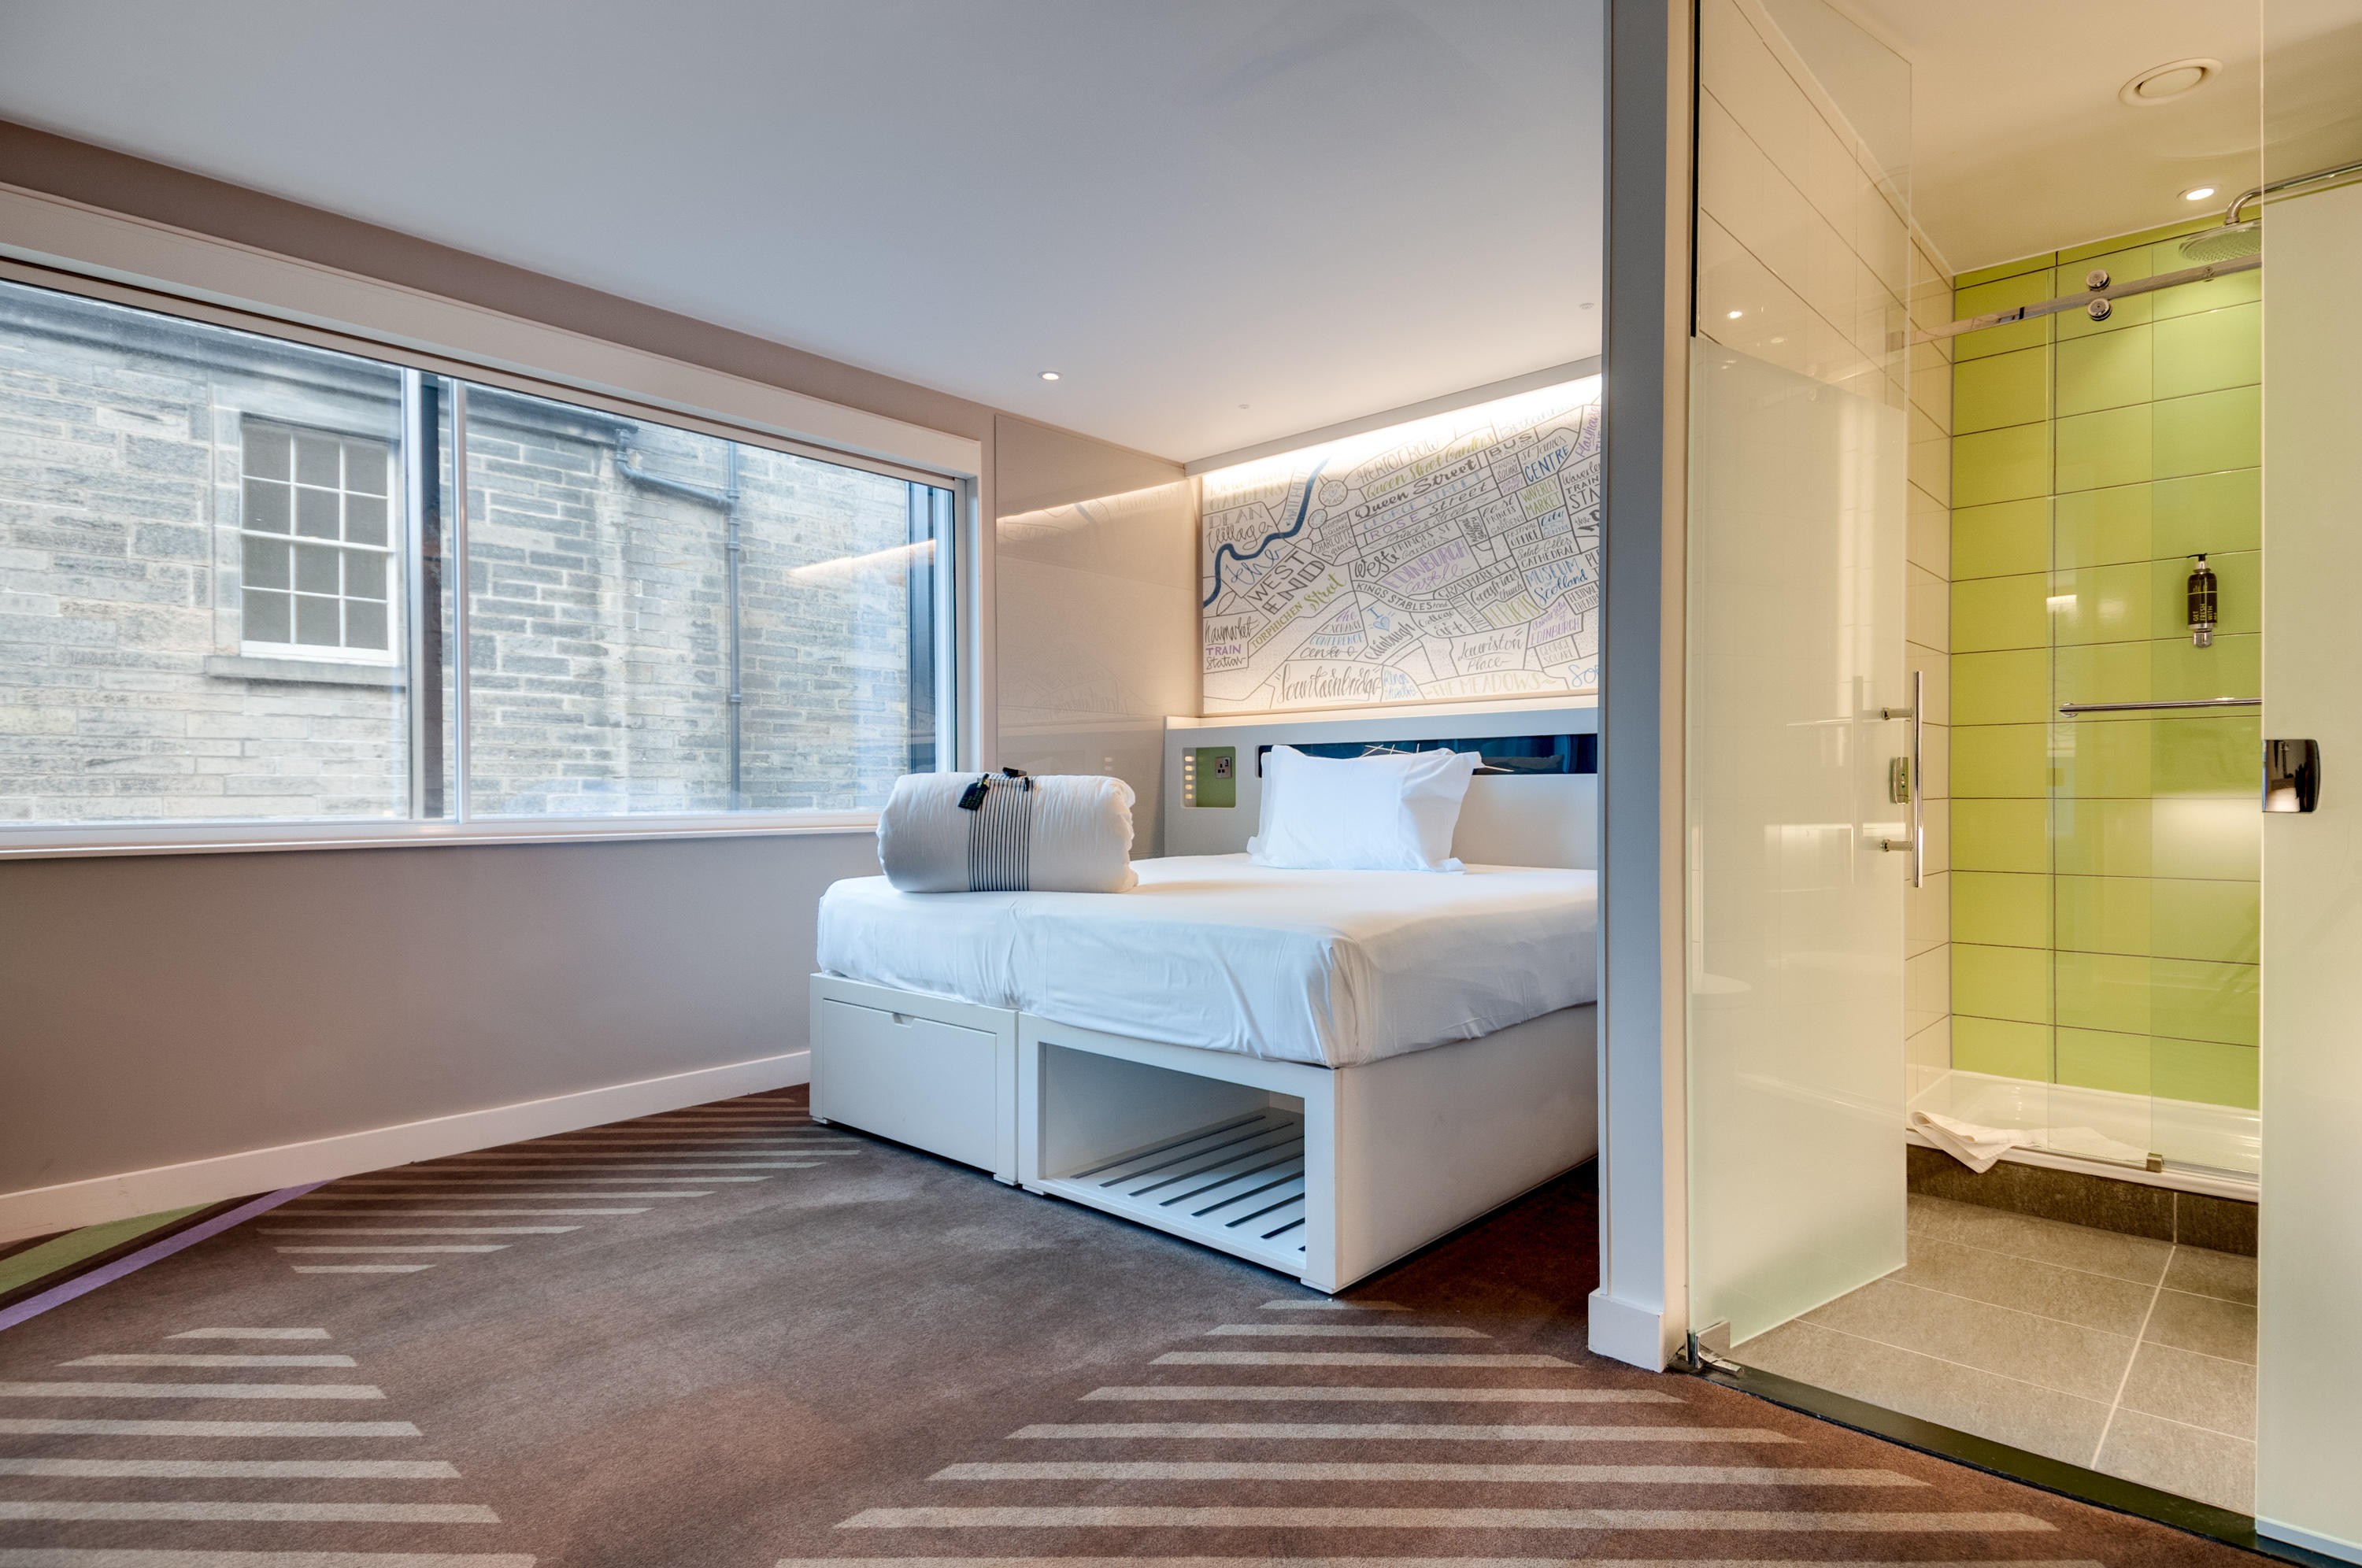 Images hub by Premier Inn London Tower Bridge hotel